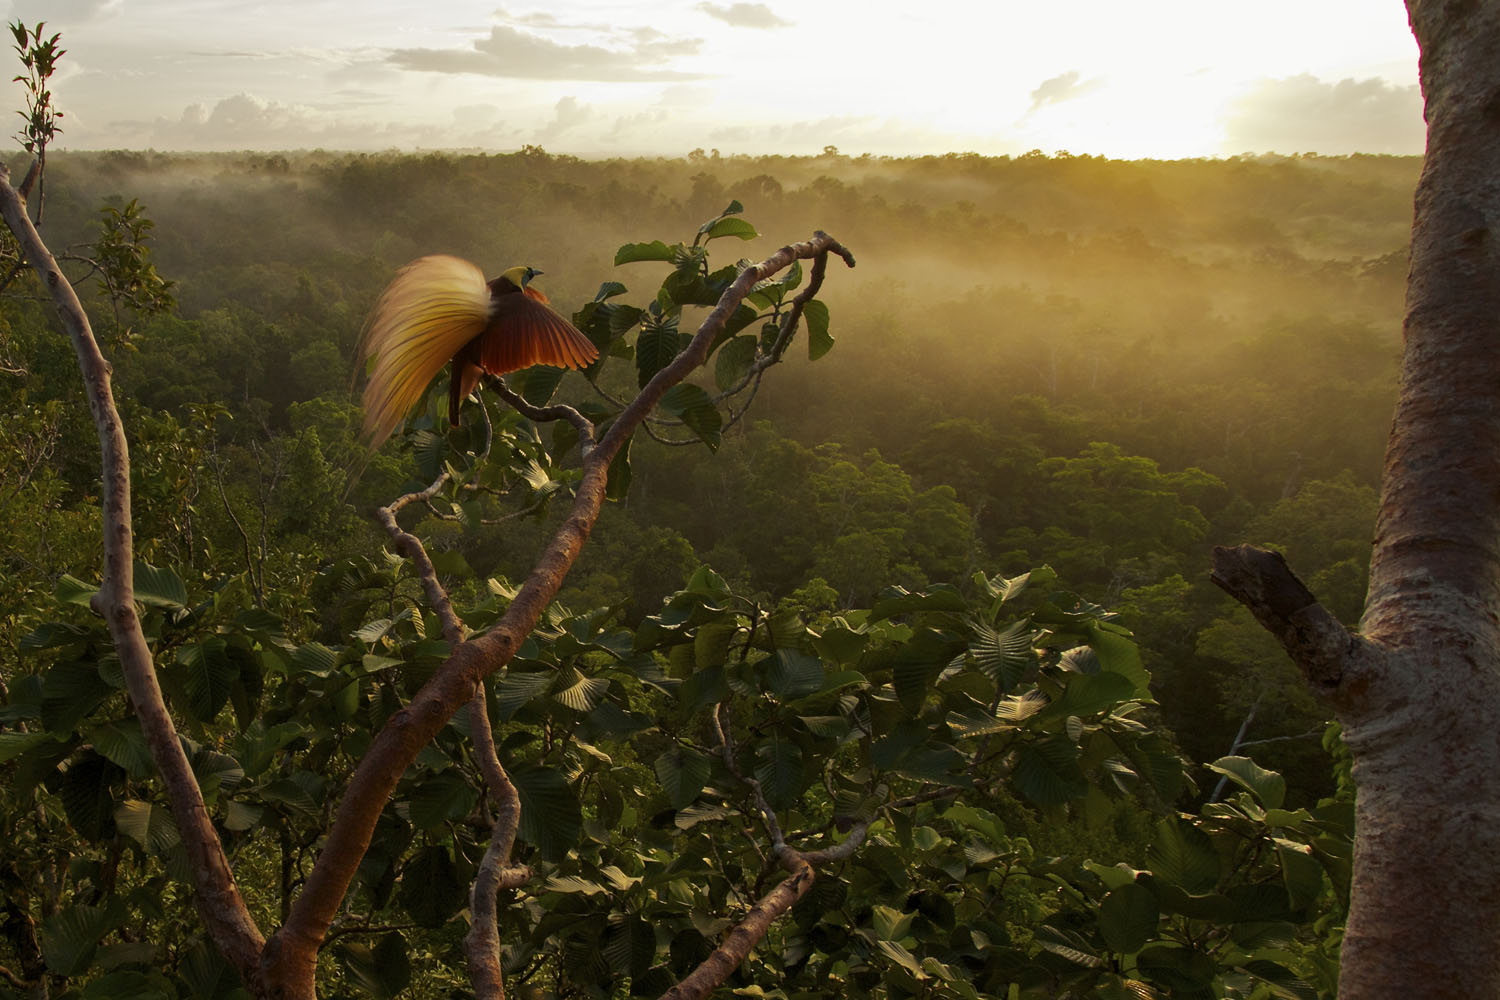 Greater Bird of Paradise (Paradisaea apoda). Badigaki Forest, Wokam Island in the Aru Islands, Indonesia.